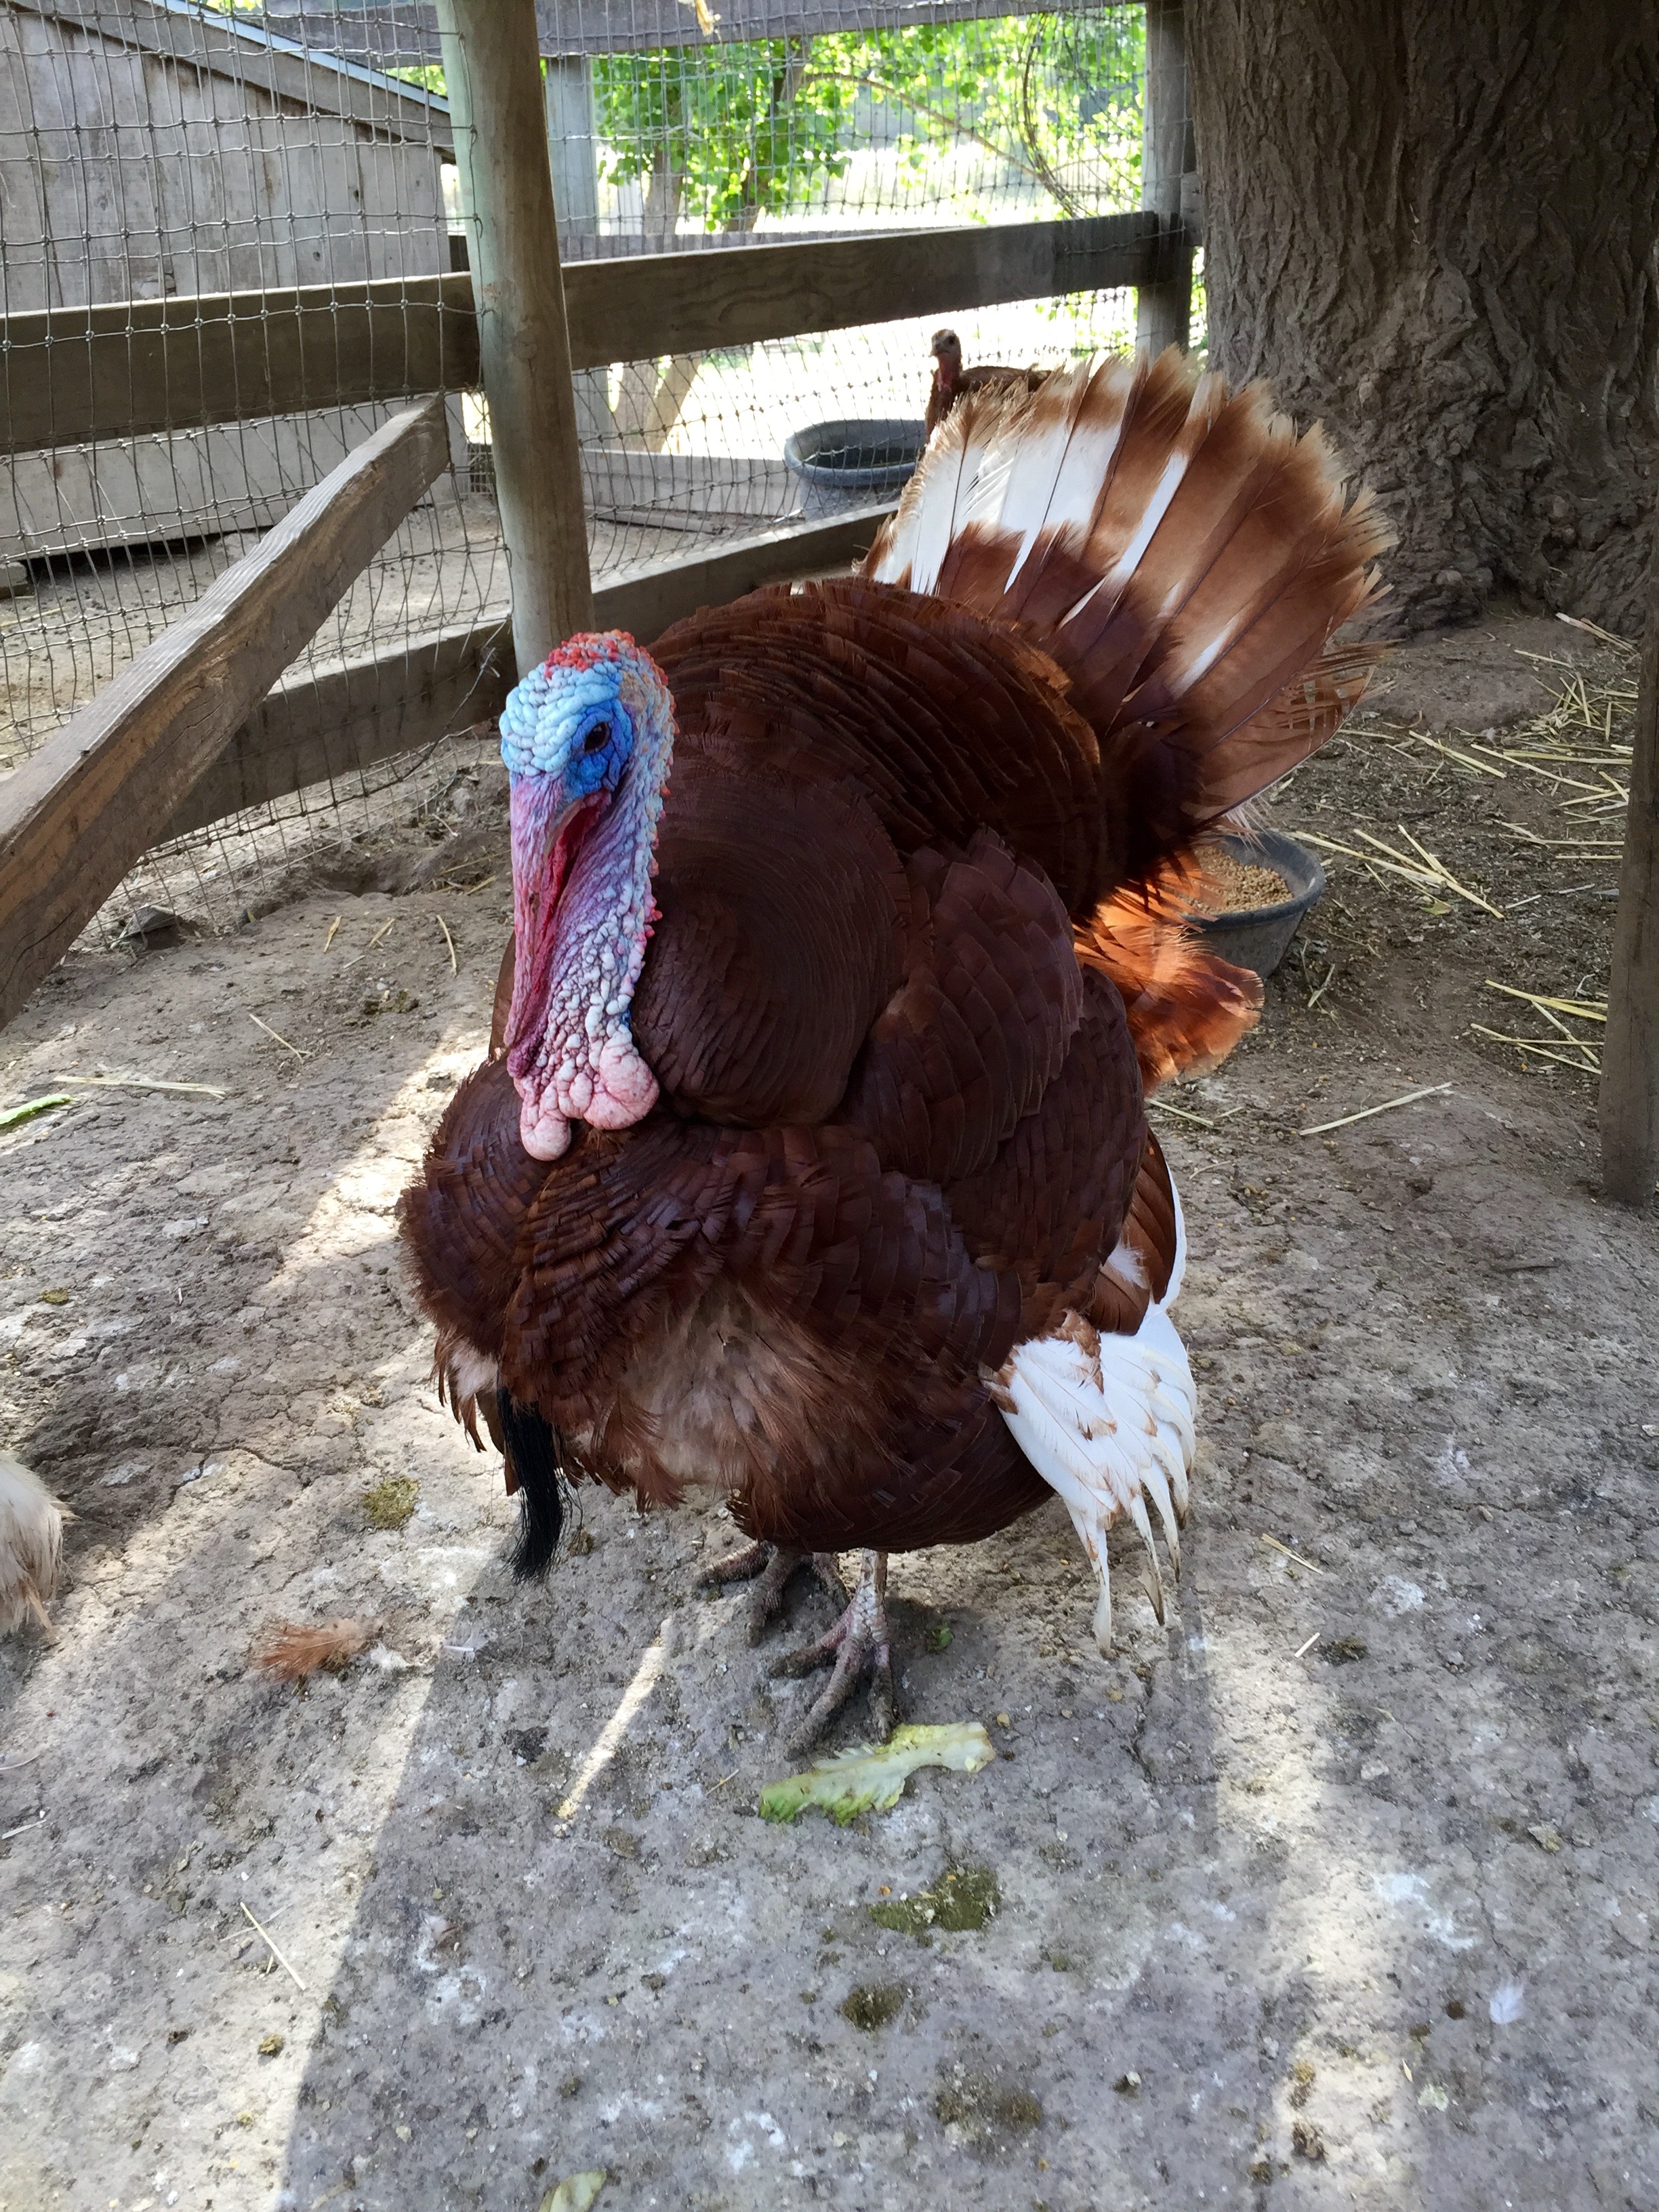 Meet my buddy Tom the Turkey.